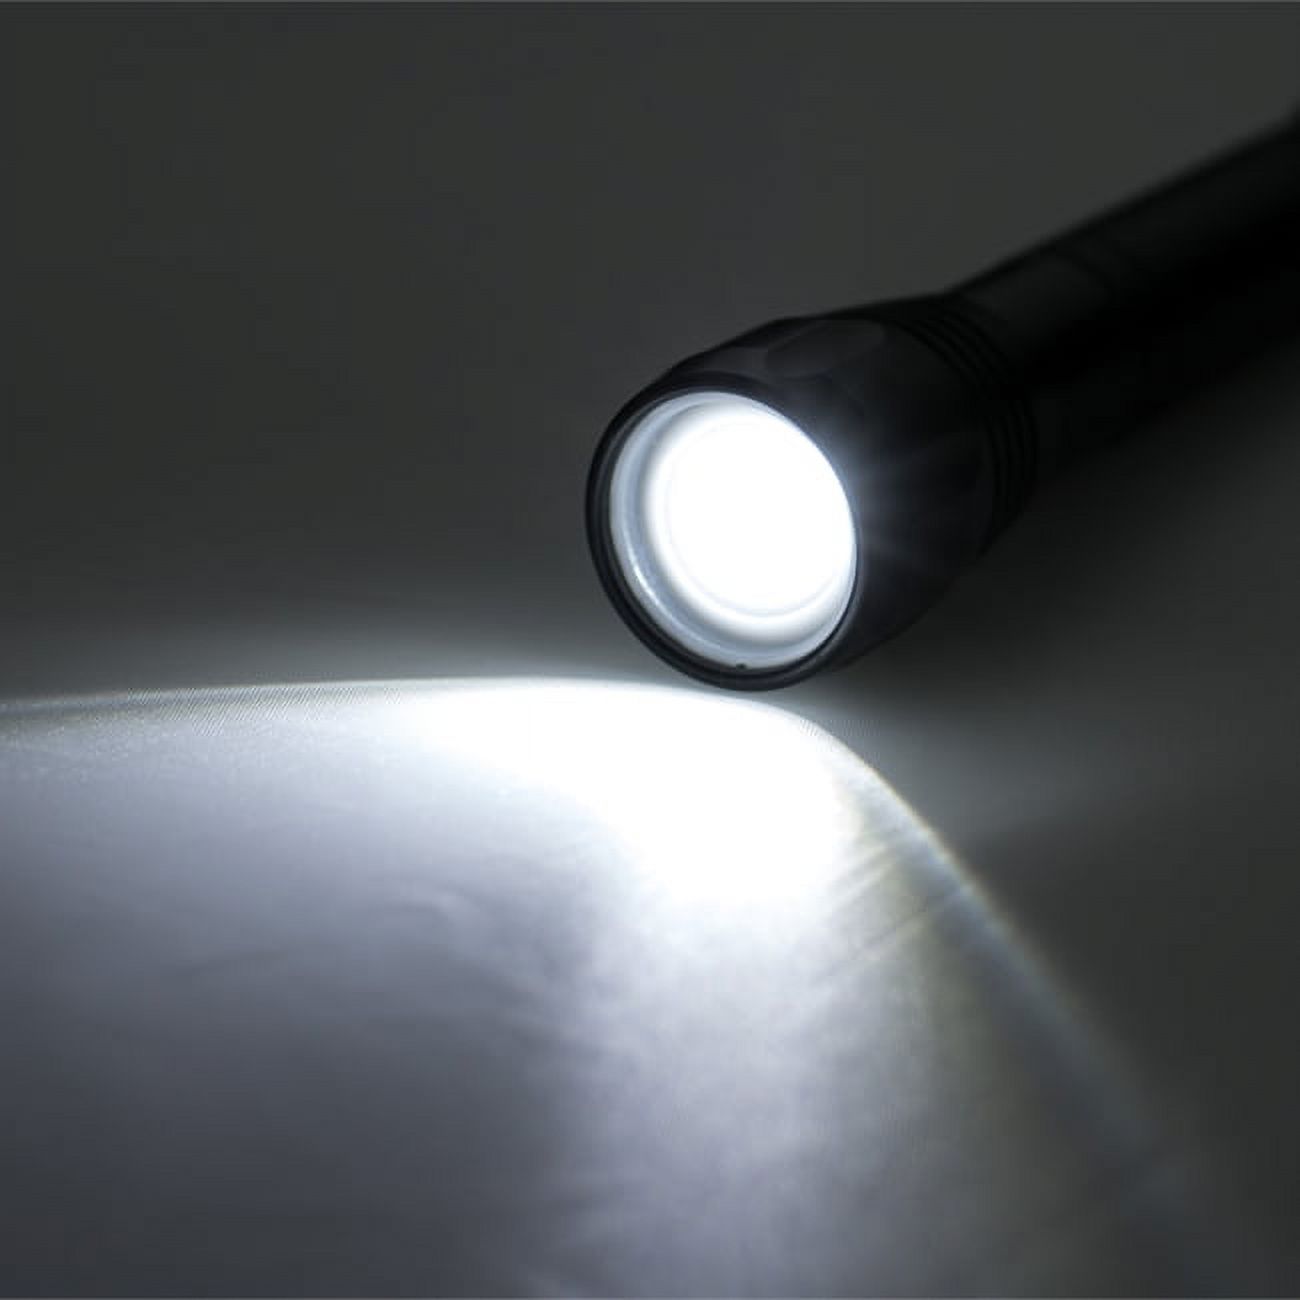 Dorcy 41-4216 2AA 200 Lumen Aluminum Focusing Flashlight - image 5 of 7